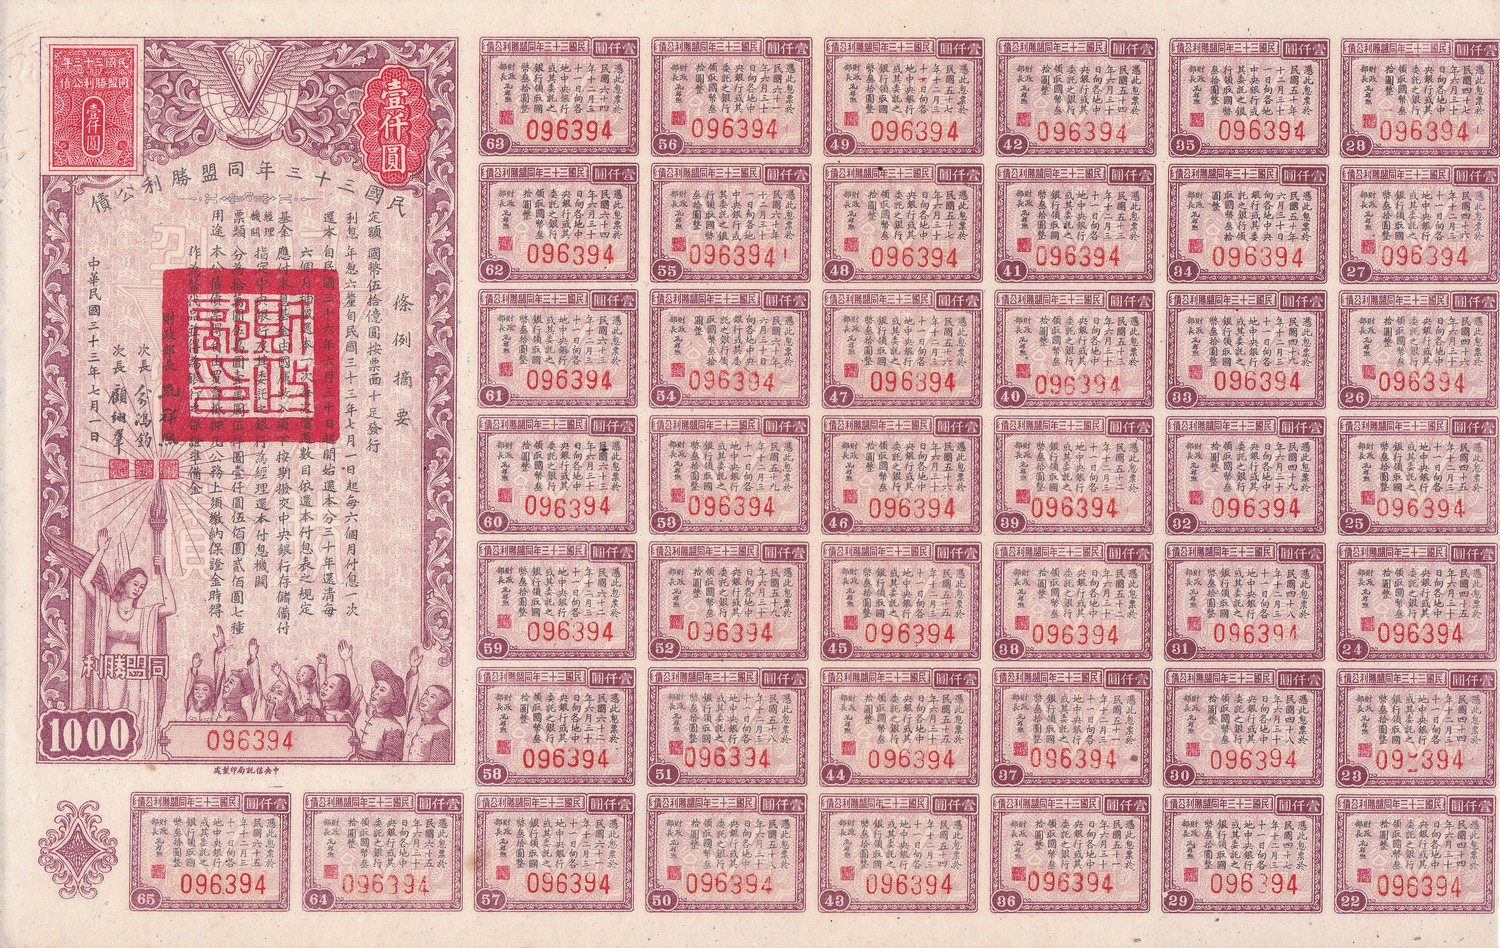 B2002, China 6% Allied Victory Bond, 1000 Dollars 1944